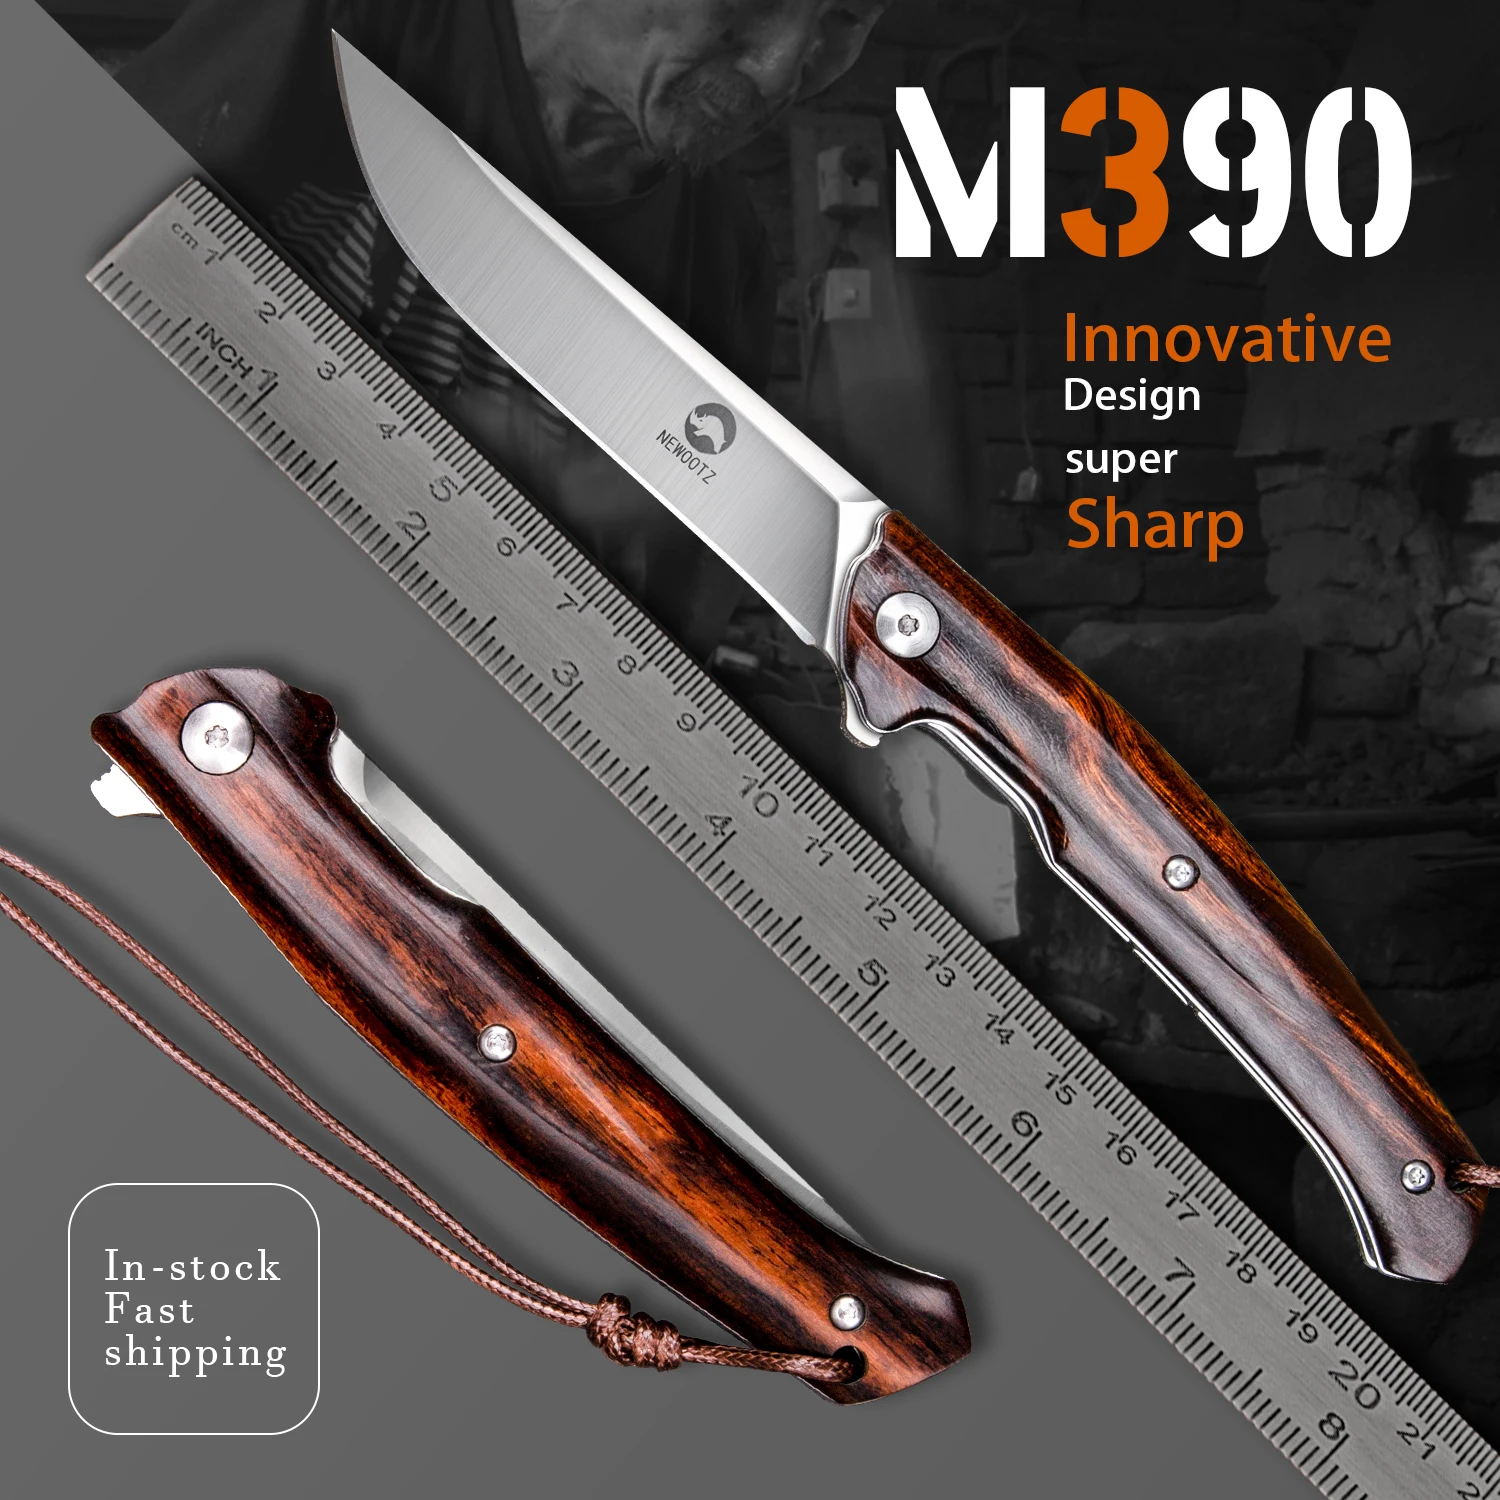 https://ae01.alicdn.com/kf/H025b6c18ebe3478b8d347fc78523e72bn/Bohler-M390-Steel-Blade-Folding-Pocket-Knife-Ironwood-Handle-with-Sheath-EDC-Tool-for-Hunting-Self.jpg